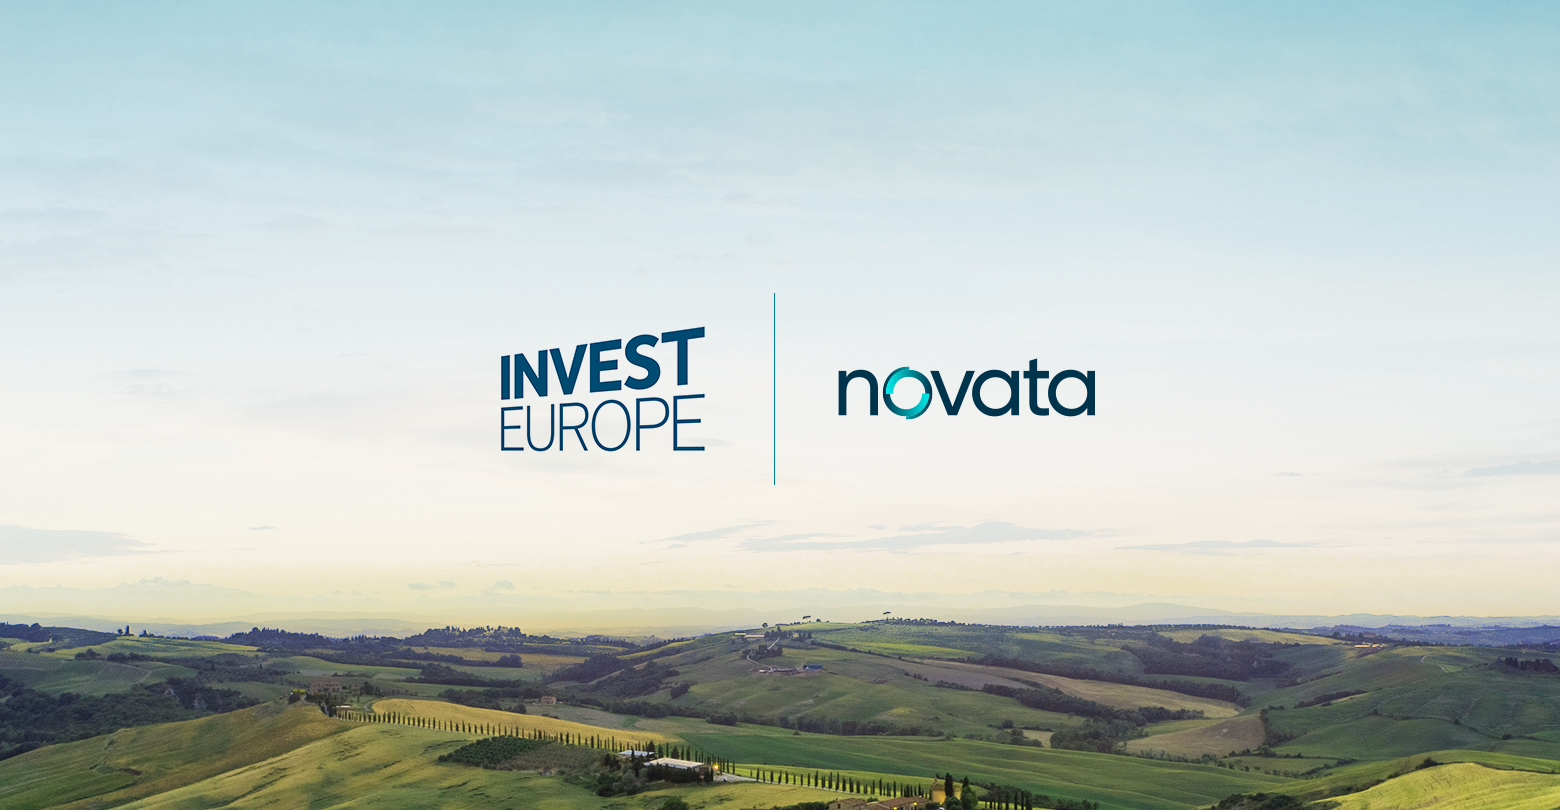 Invest Europe and Novata logos on landscape image